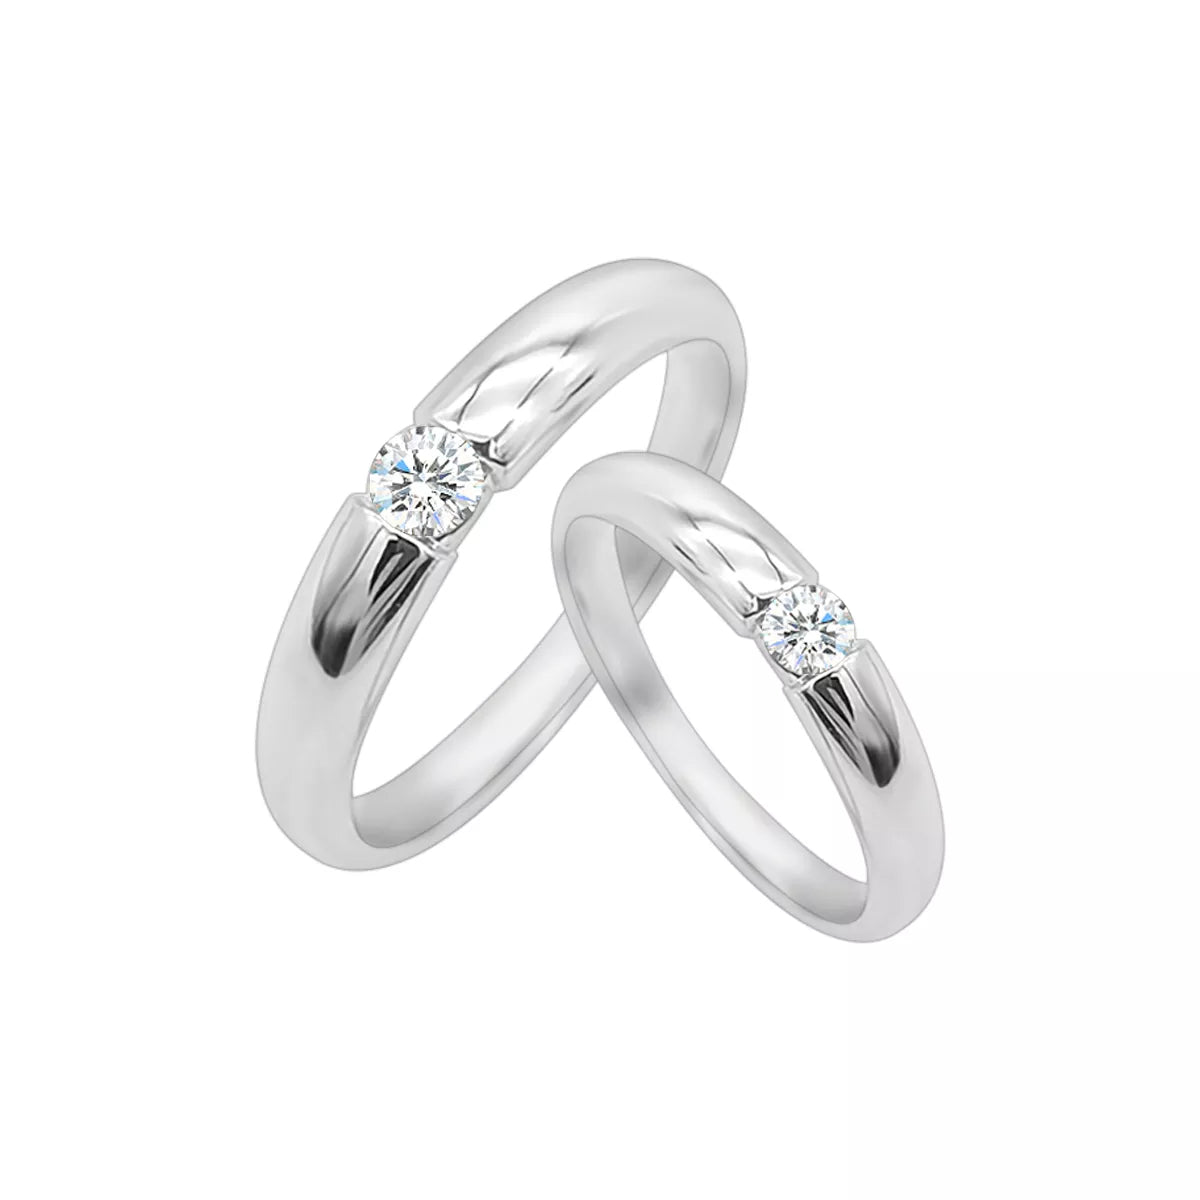 Round Cut Brilliant Diamond Gap Wedding Rings 18K White Gold